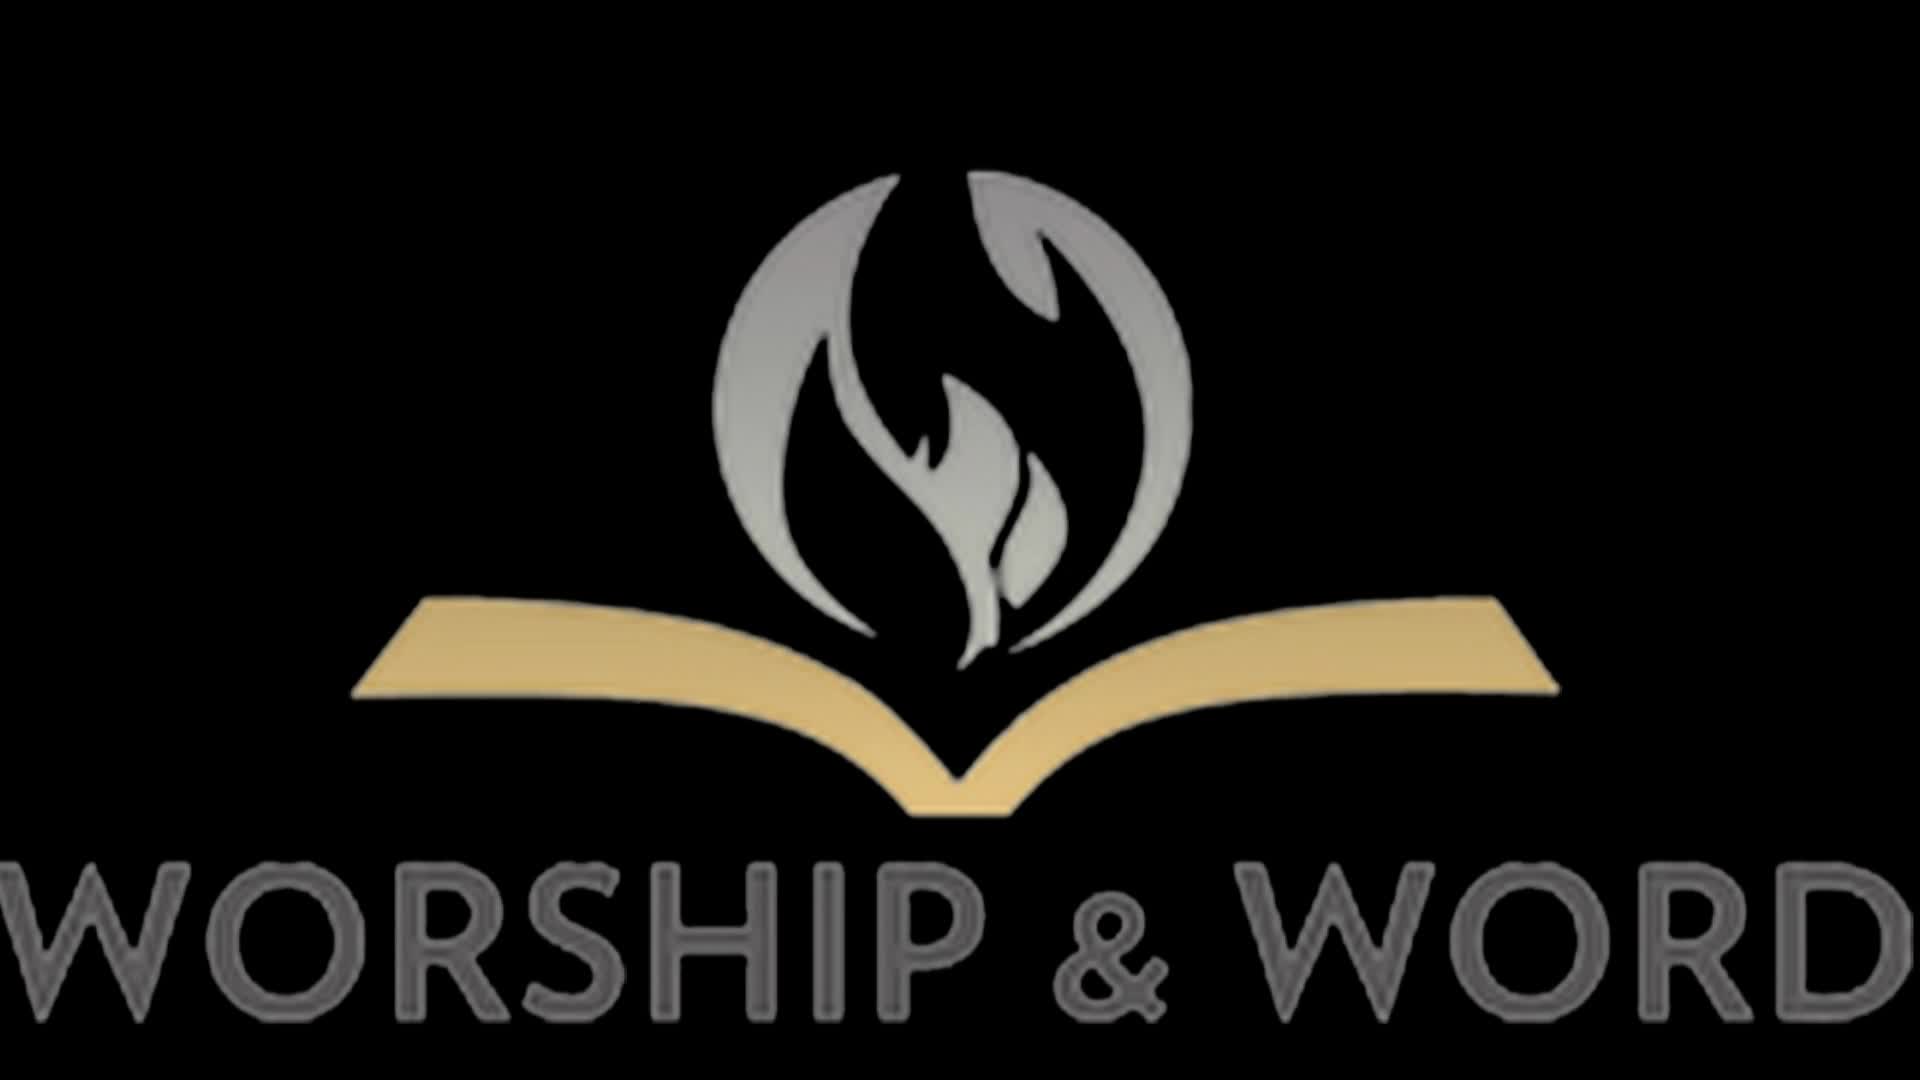 Sunday Worship Service Worship and Word